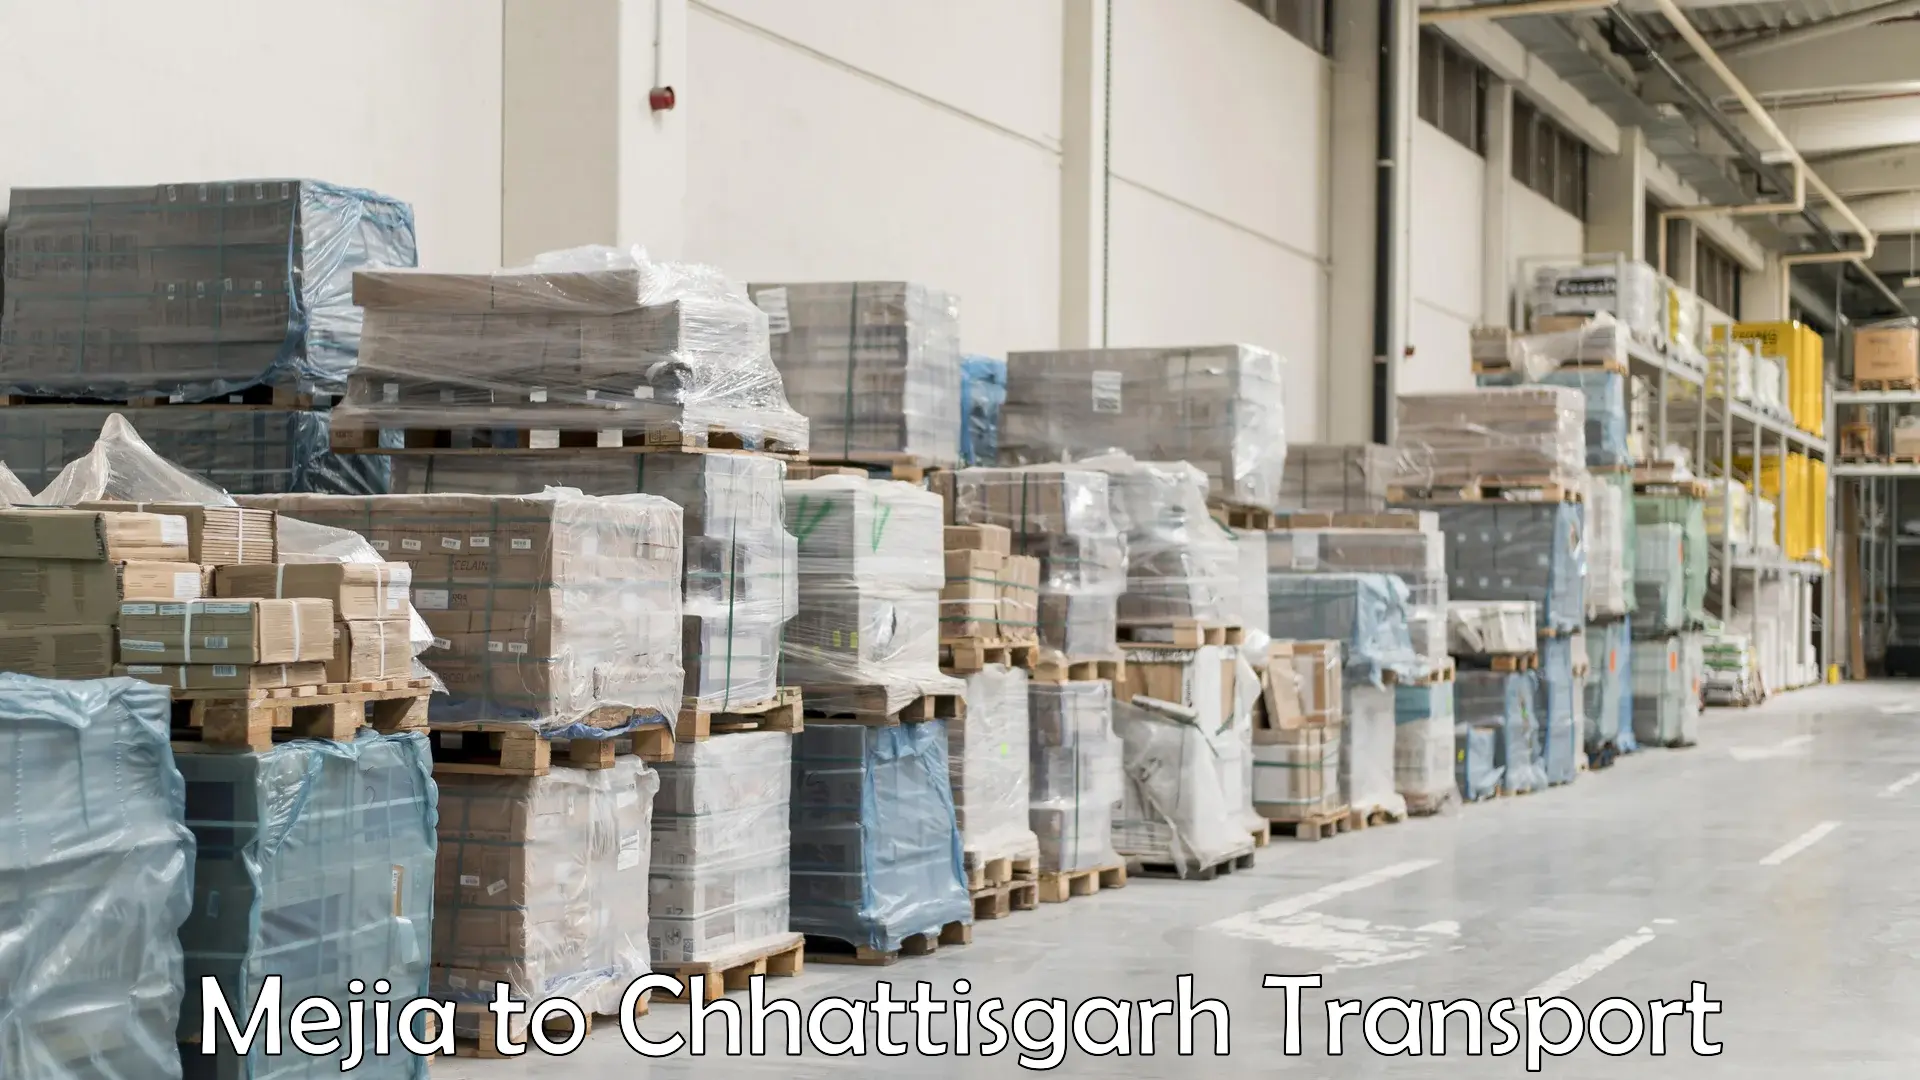 Truck transport companies in India Mejia to Chhattisgarh